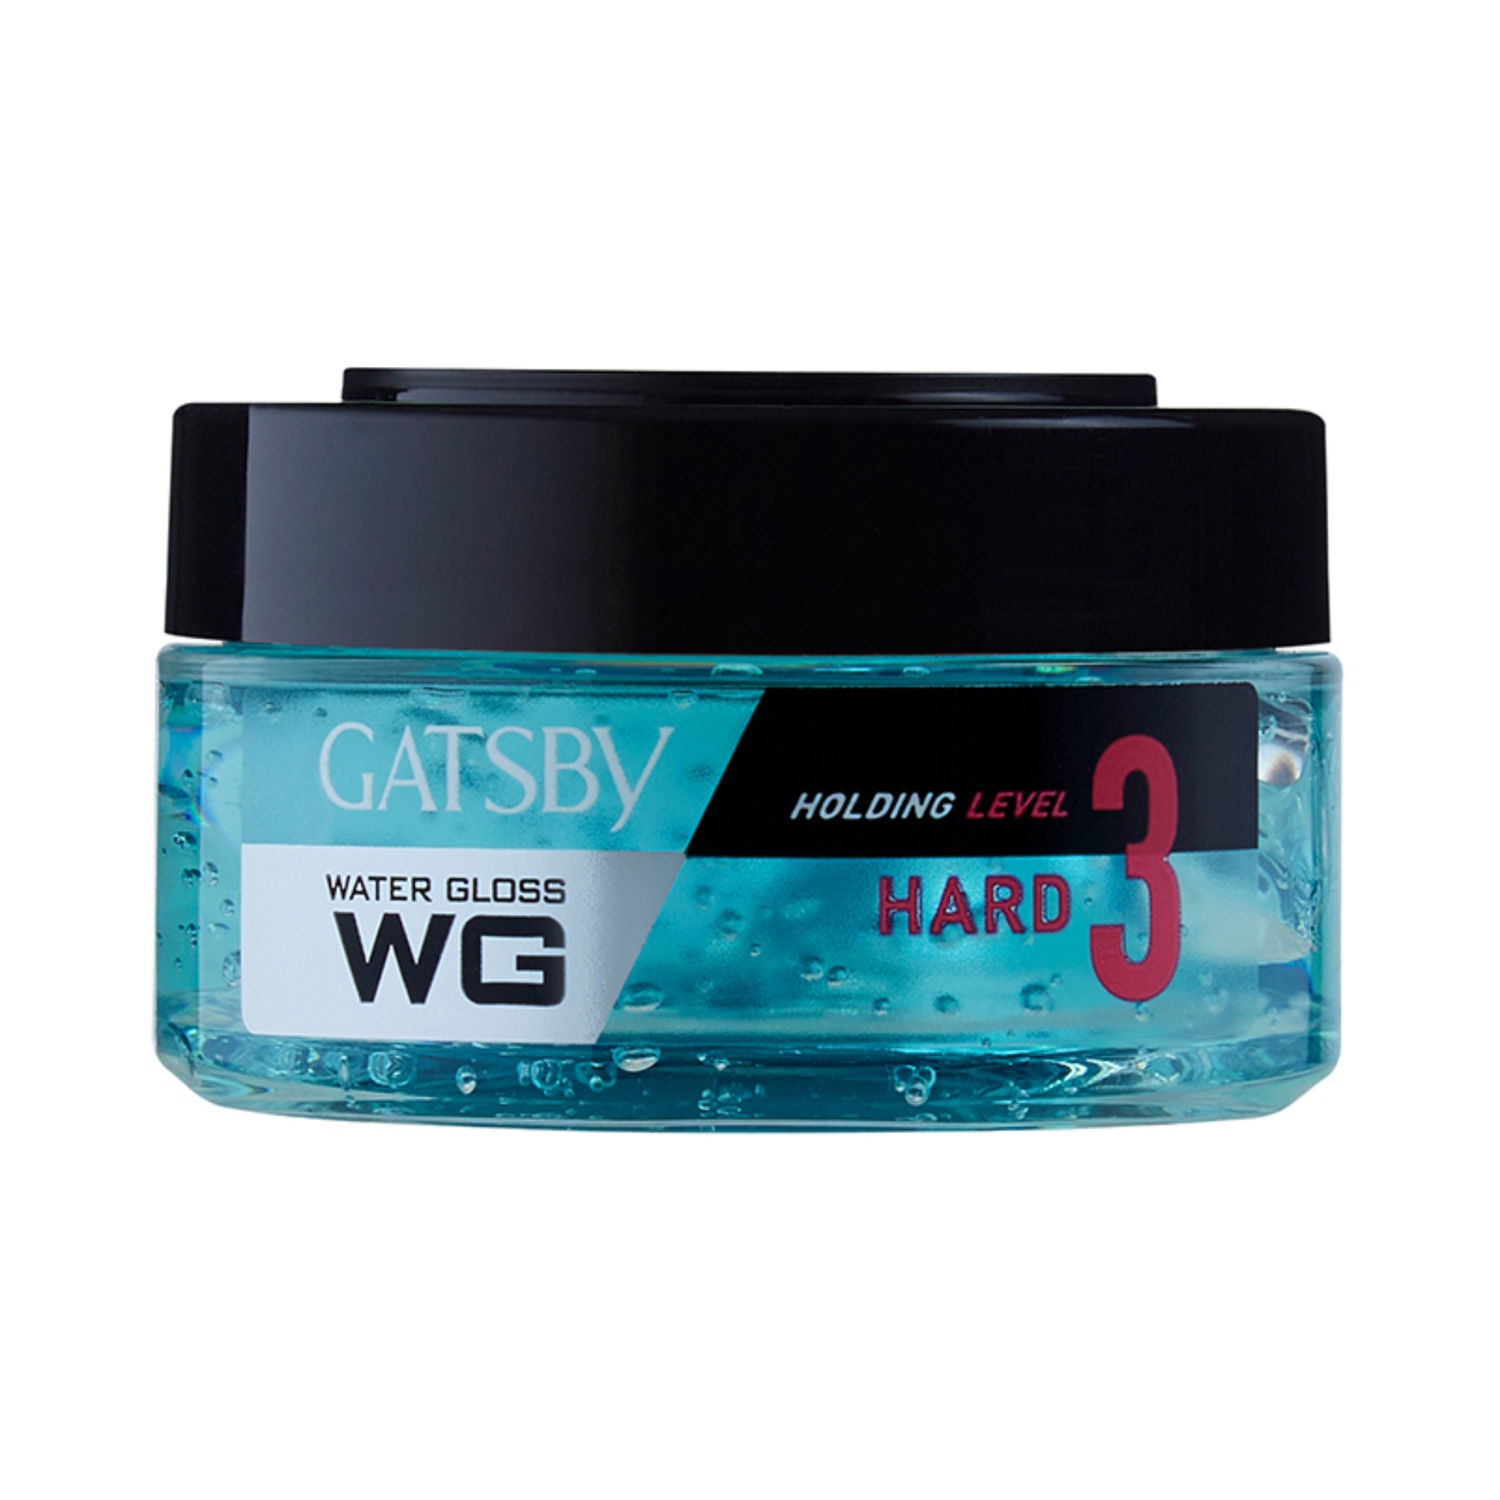 Gatsby Water Gloss Hard Gel (75g)